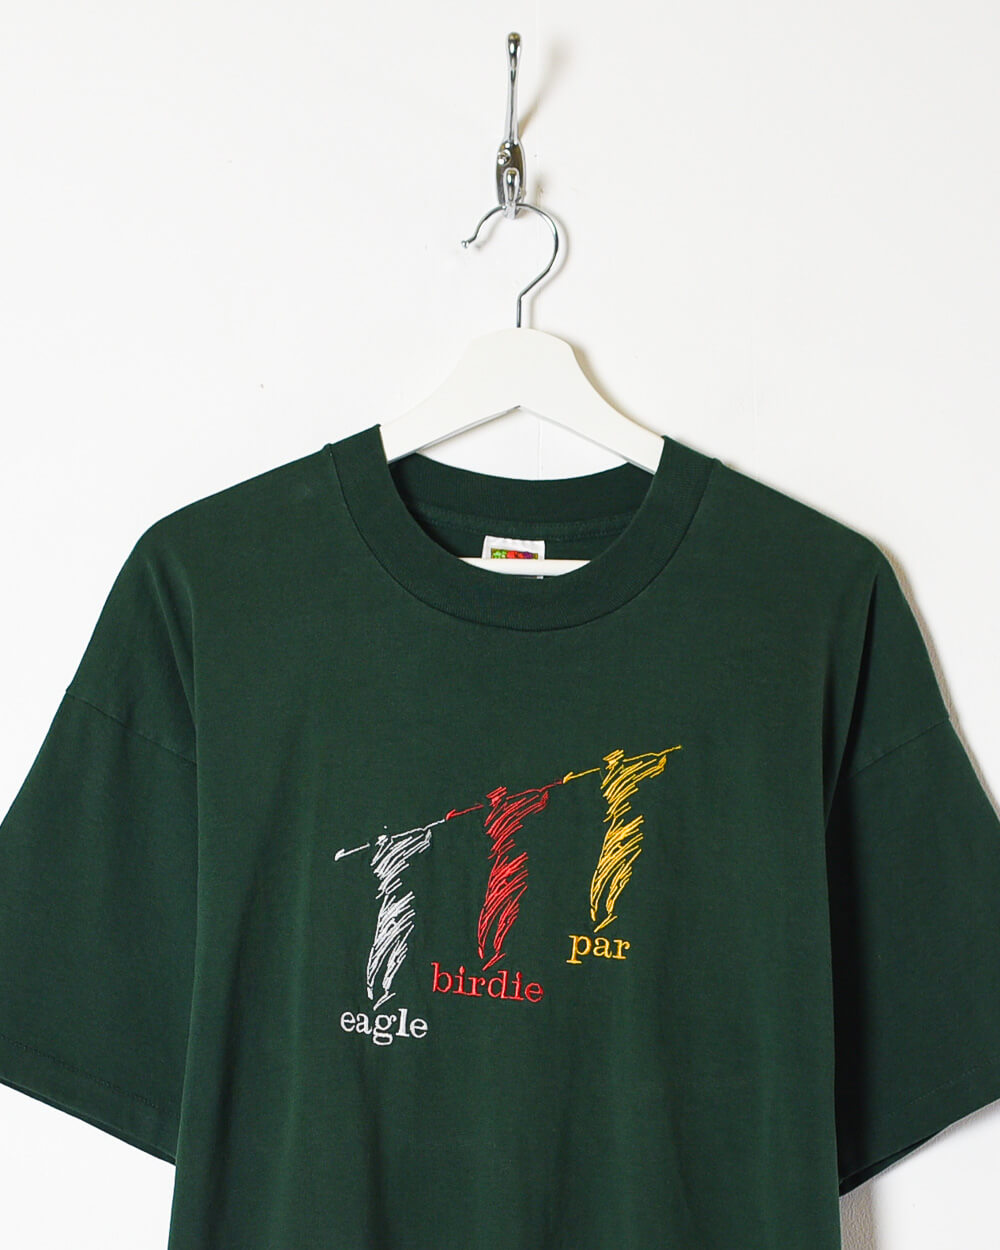 Green Golf Eagle Birdie Par T-Shirt - X-Large